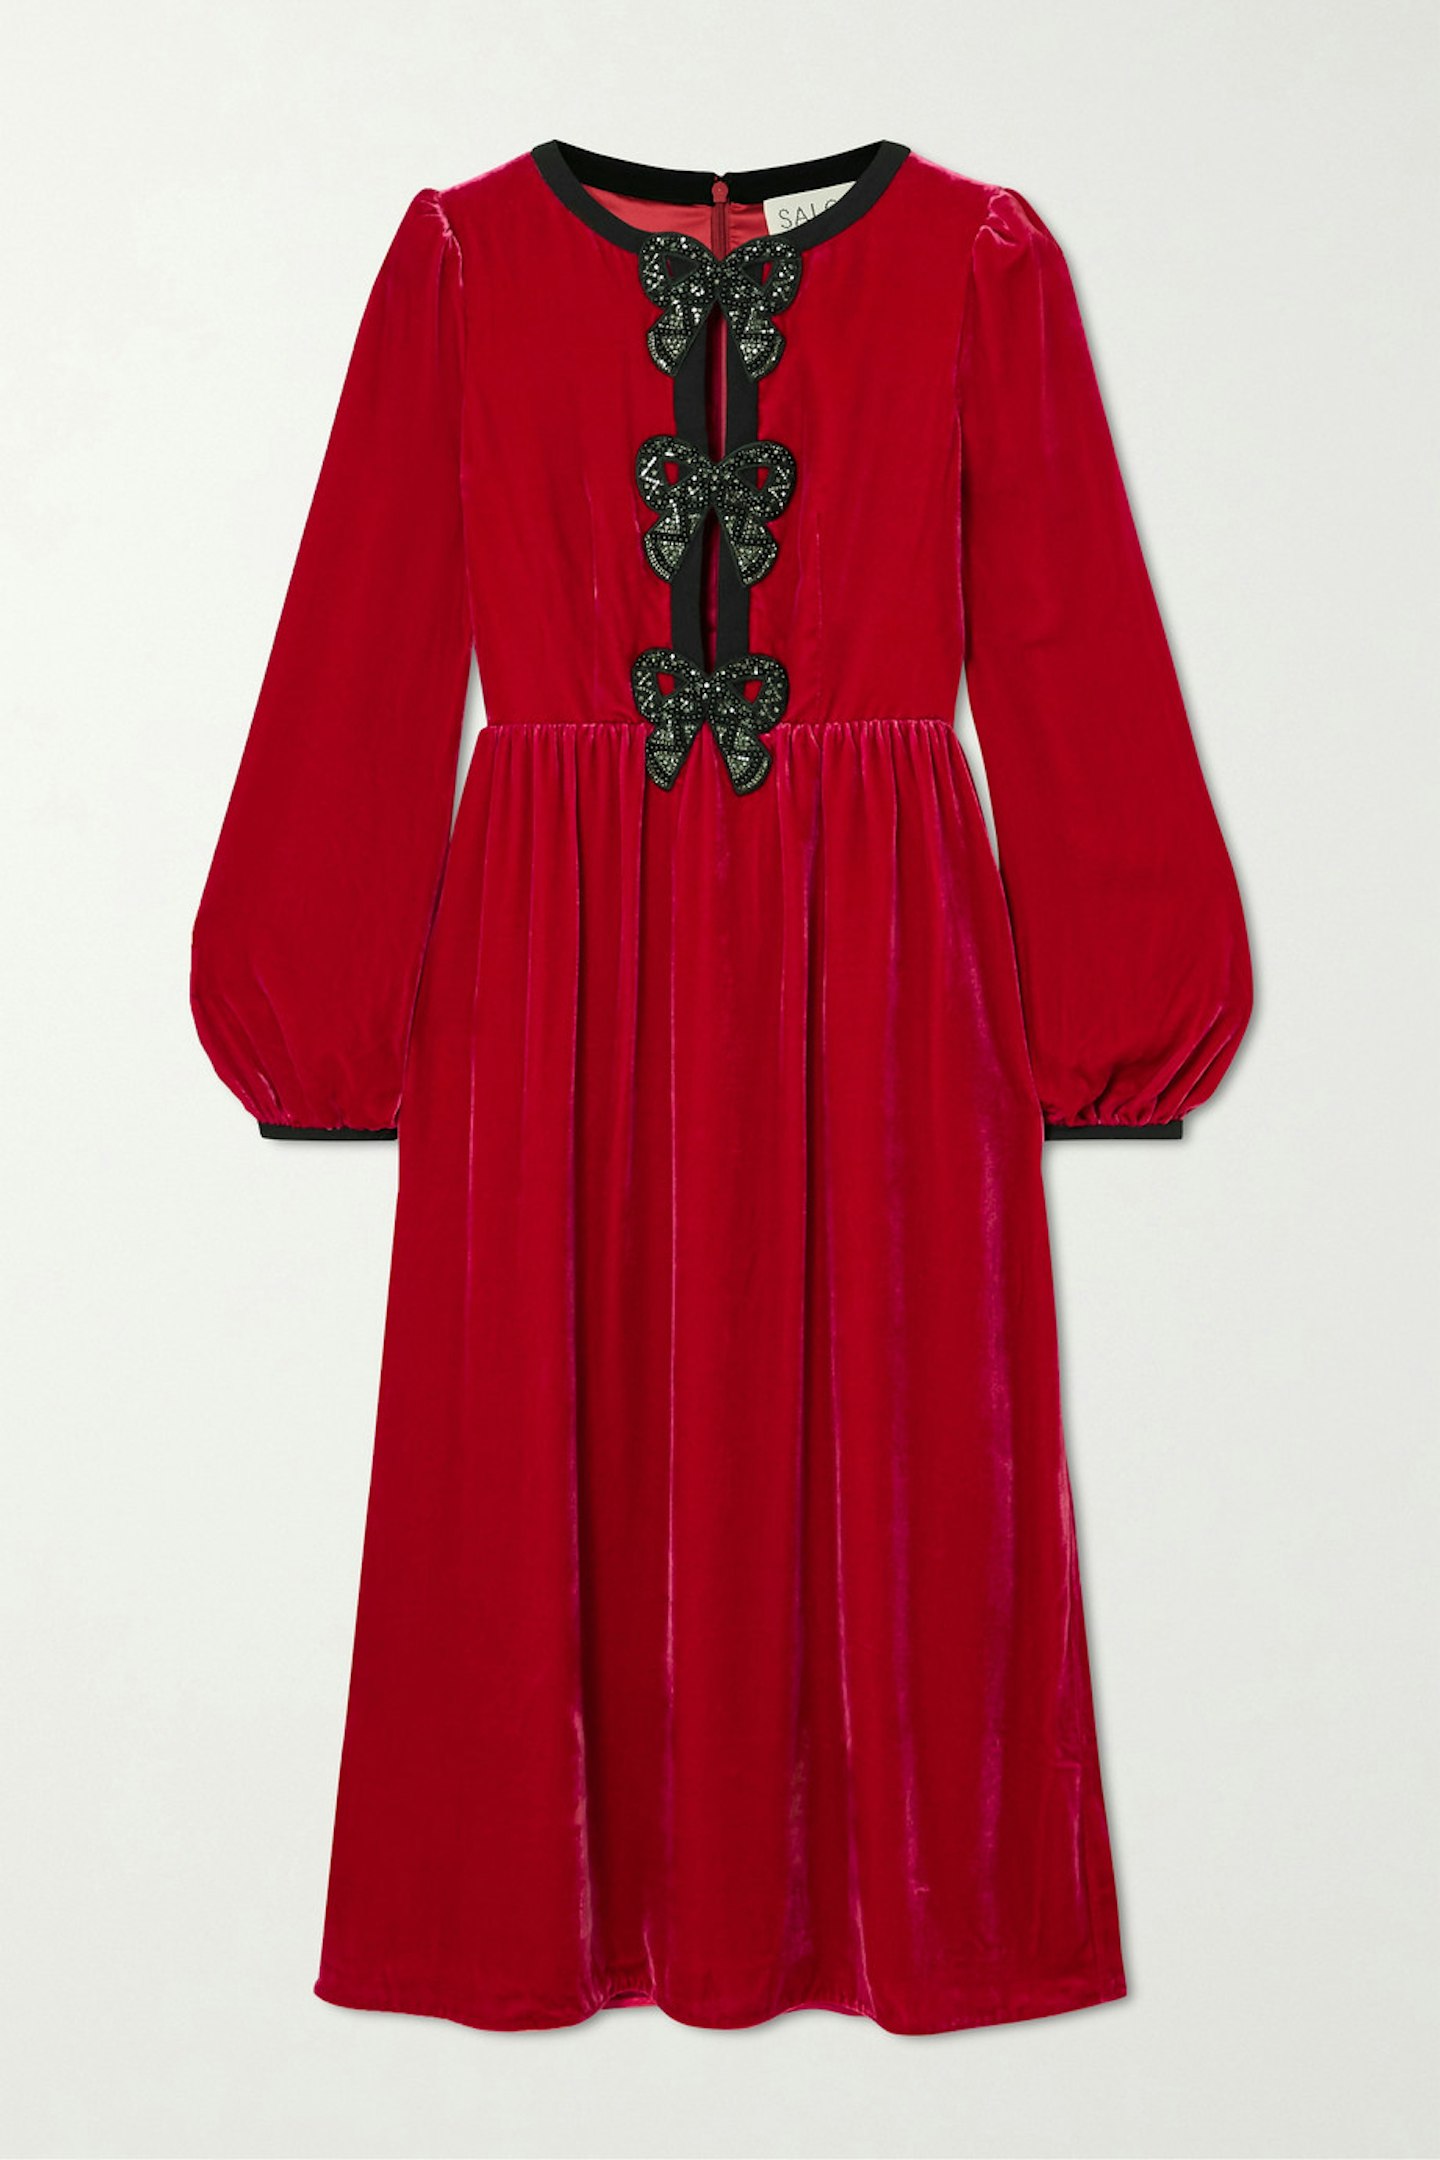 Saloni, Camille bow-embellished velvet midi dress, £695